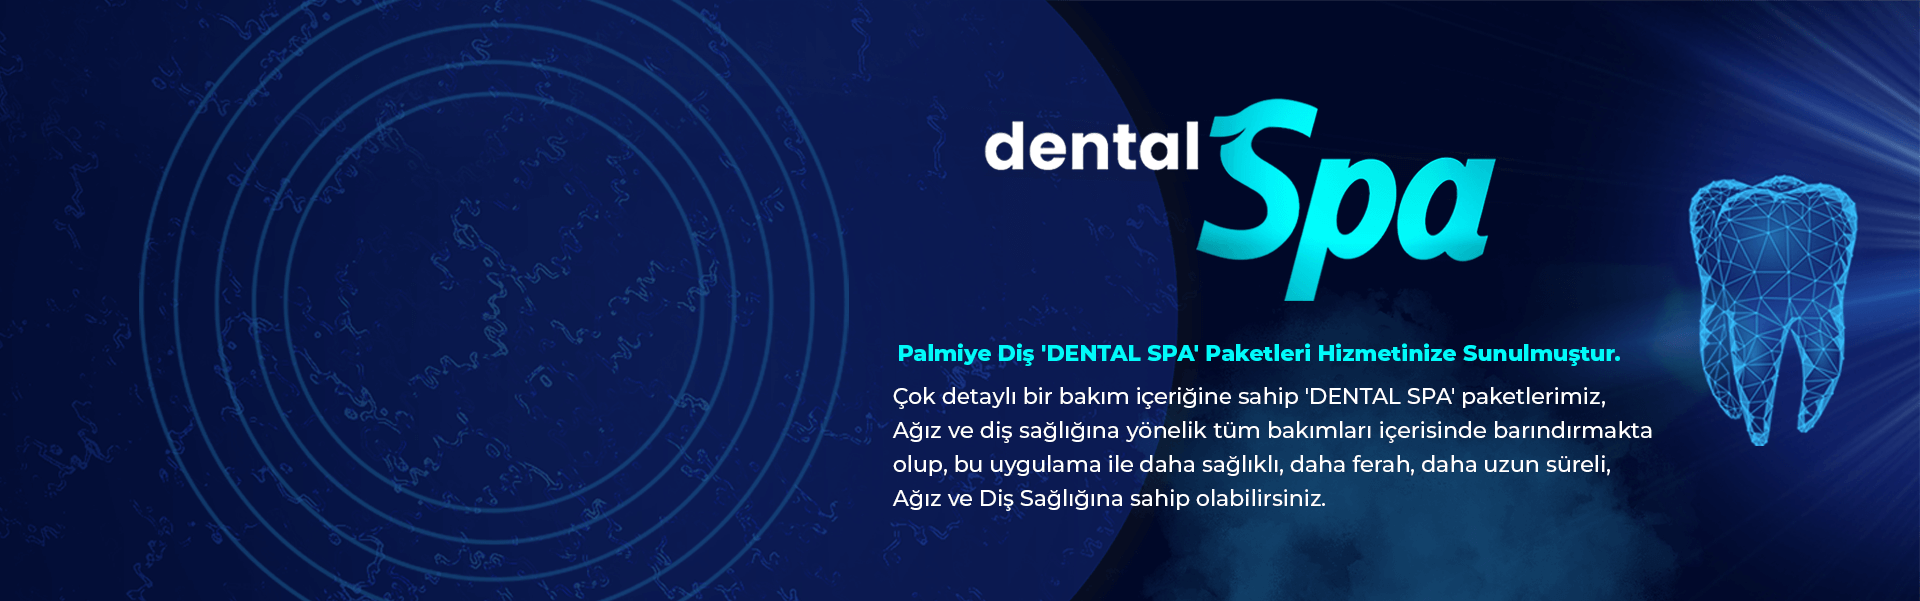 <h2 class='mb-2 h1 dental-spa-text d-none d-lg-block'>Dental Spa</h2>